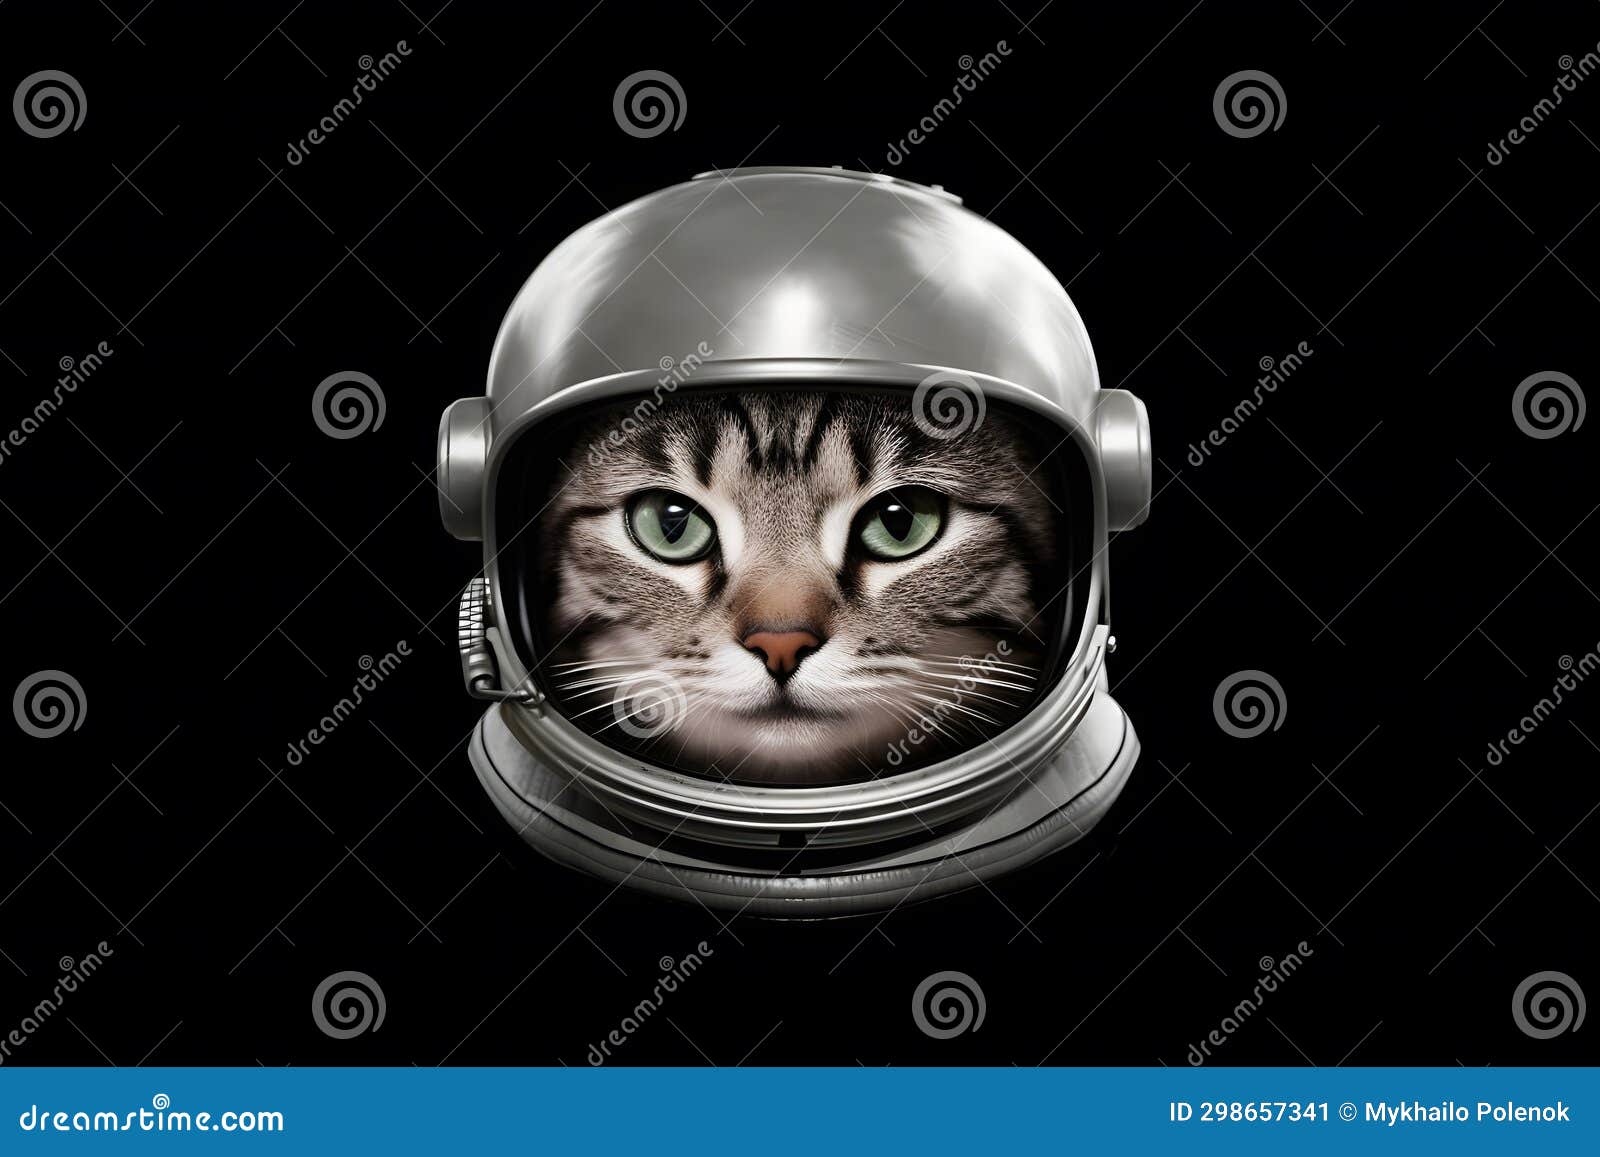 Astronaut cat in a spacesuit. Portrait of a cat in space, cat